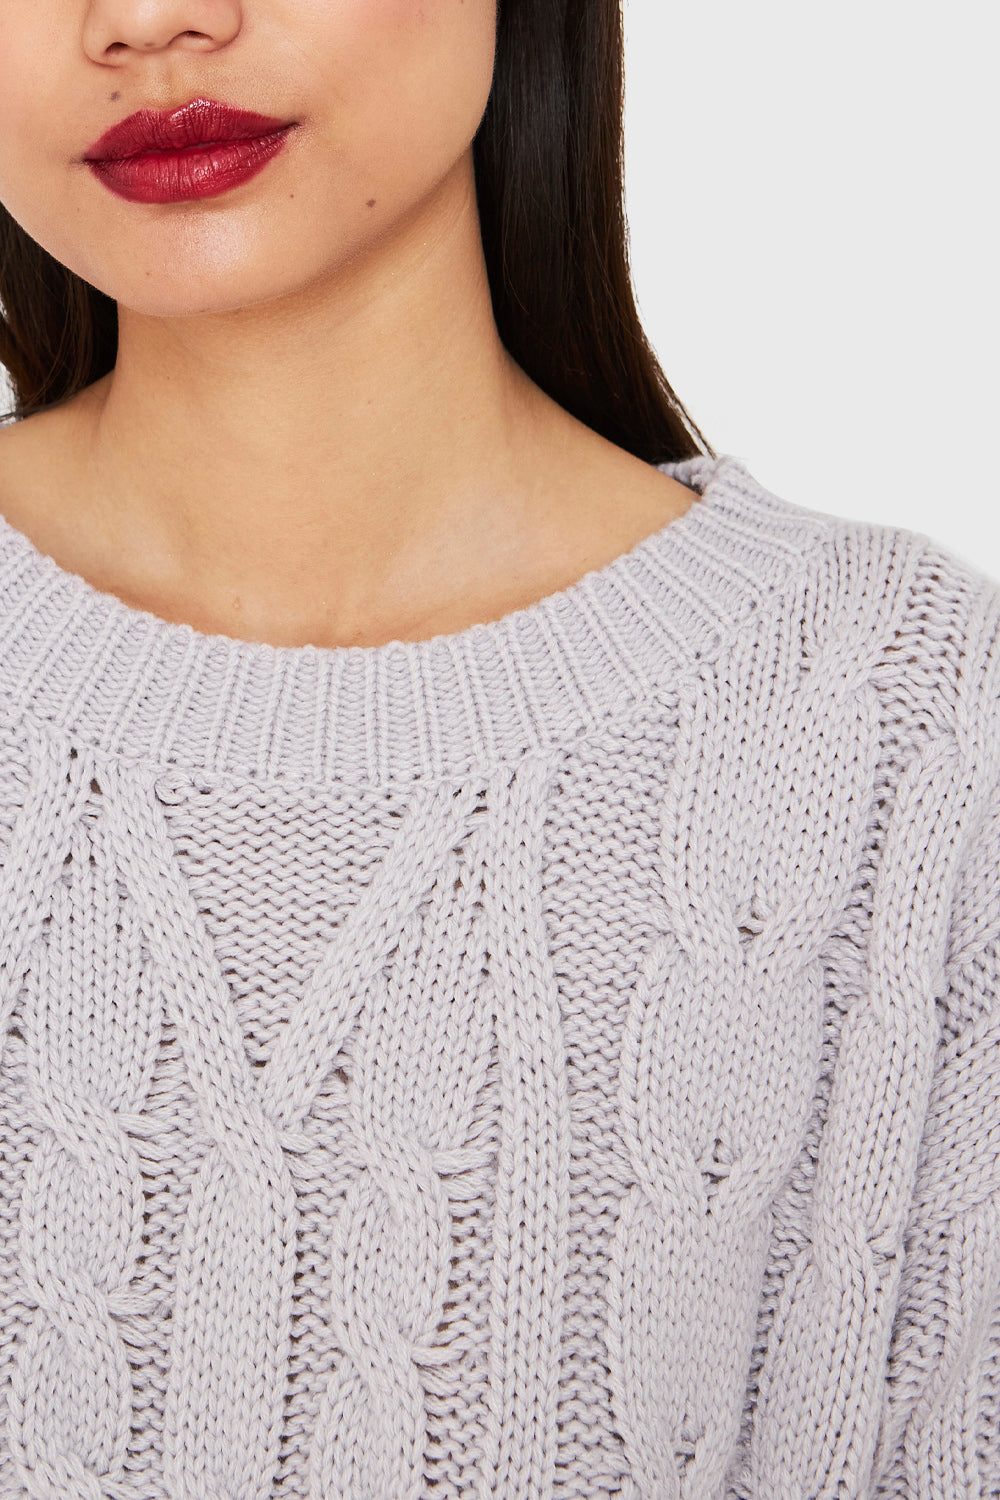 Sweater Crop Trenzado Lila